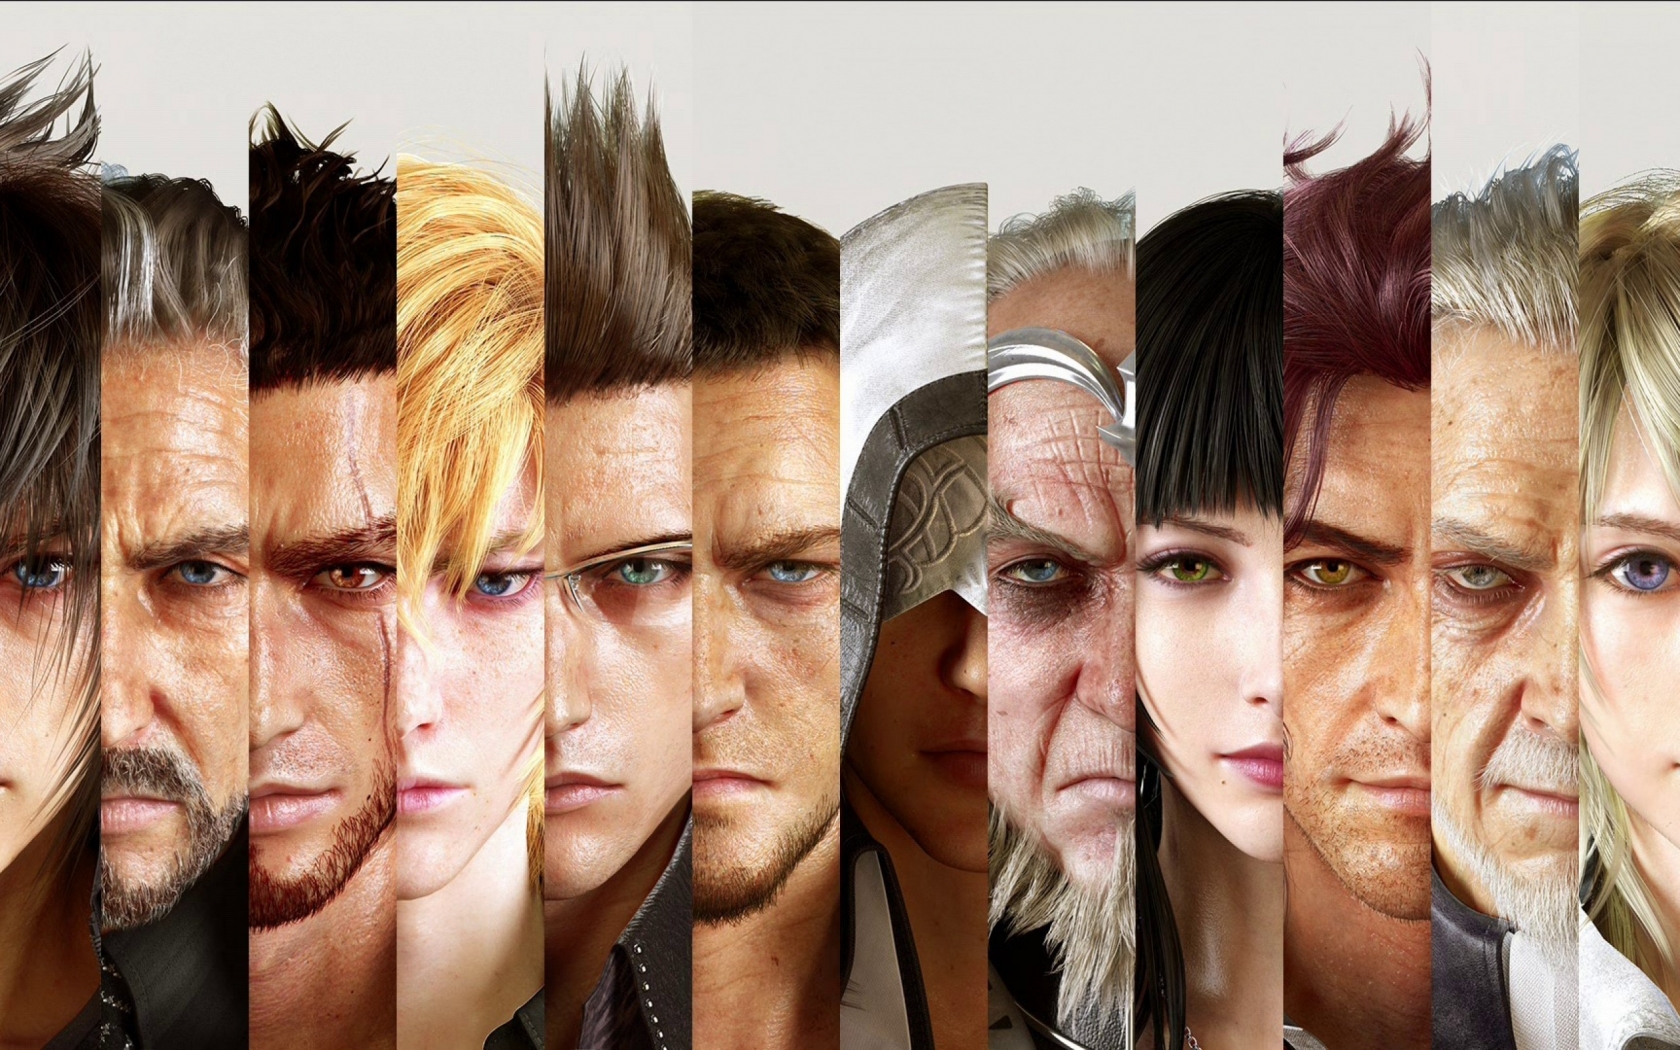 Final Fantasy XV Cast for 1680 x 1050 widescreen resolution